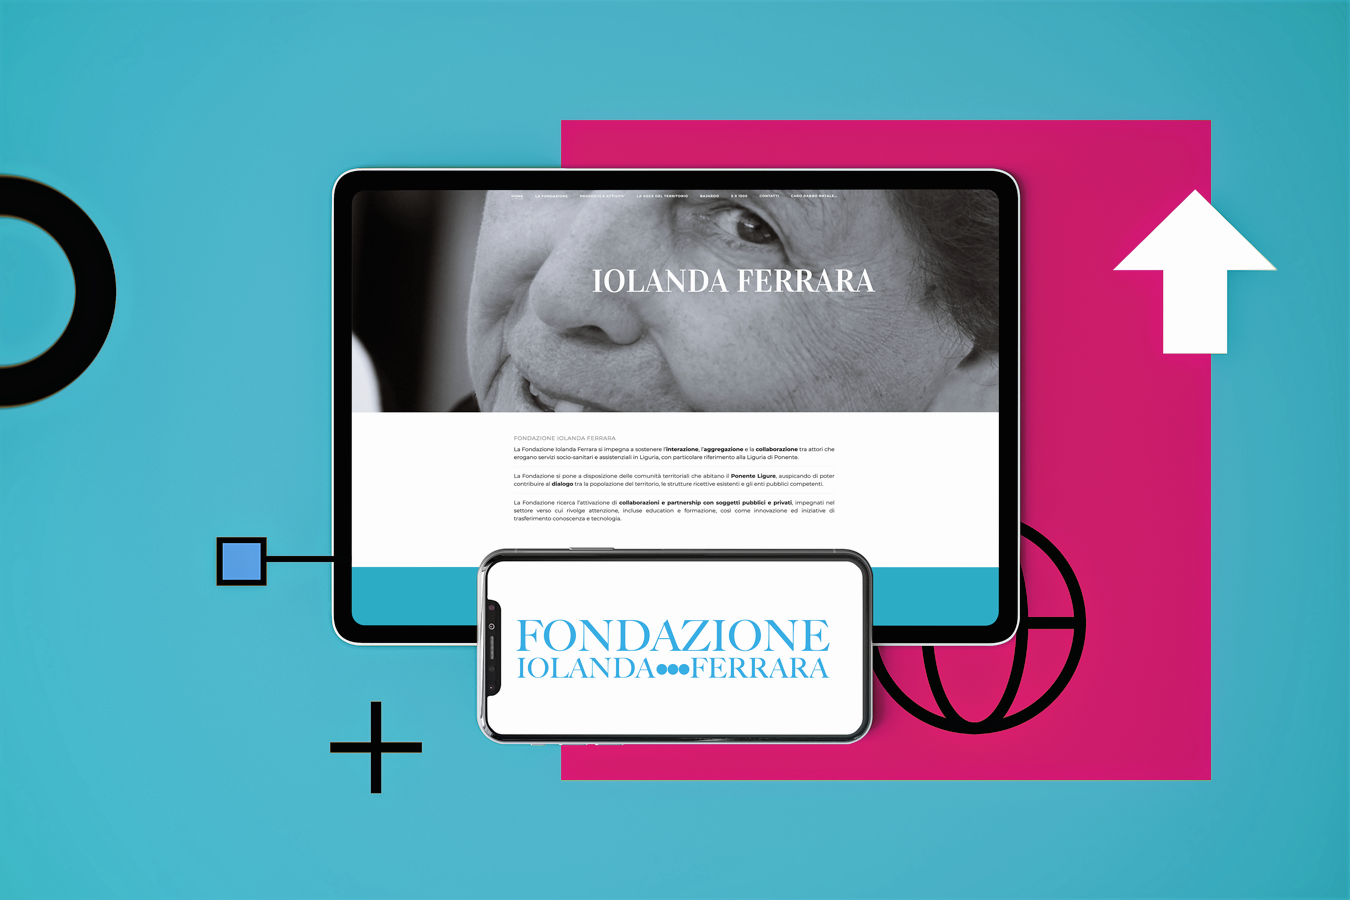 Fondazione Iolanda Ferrara